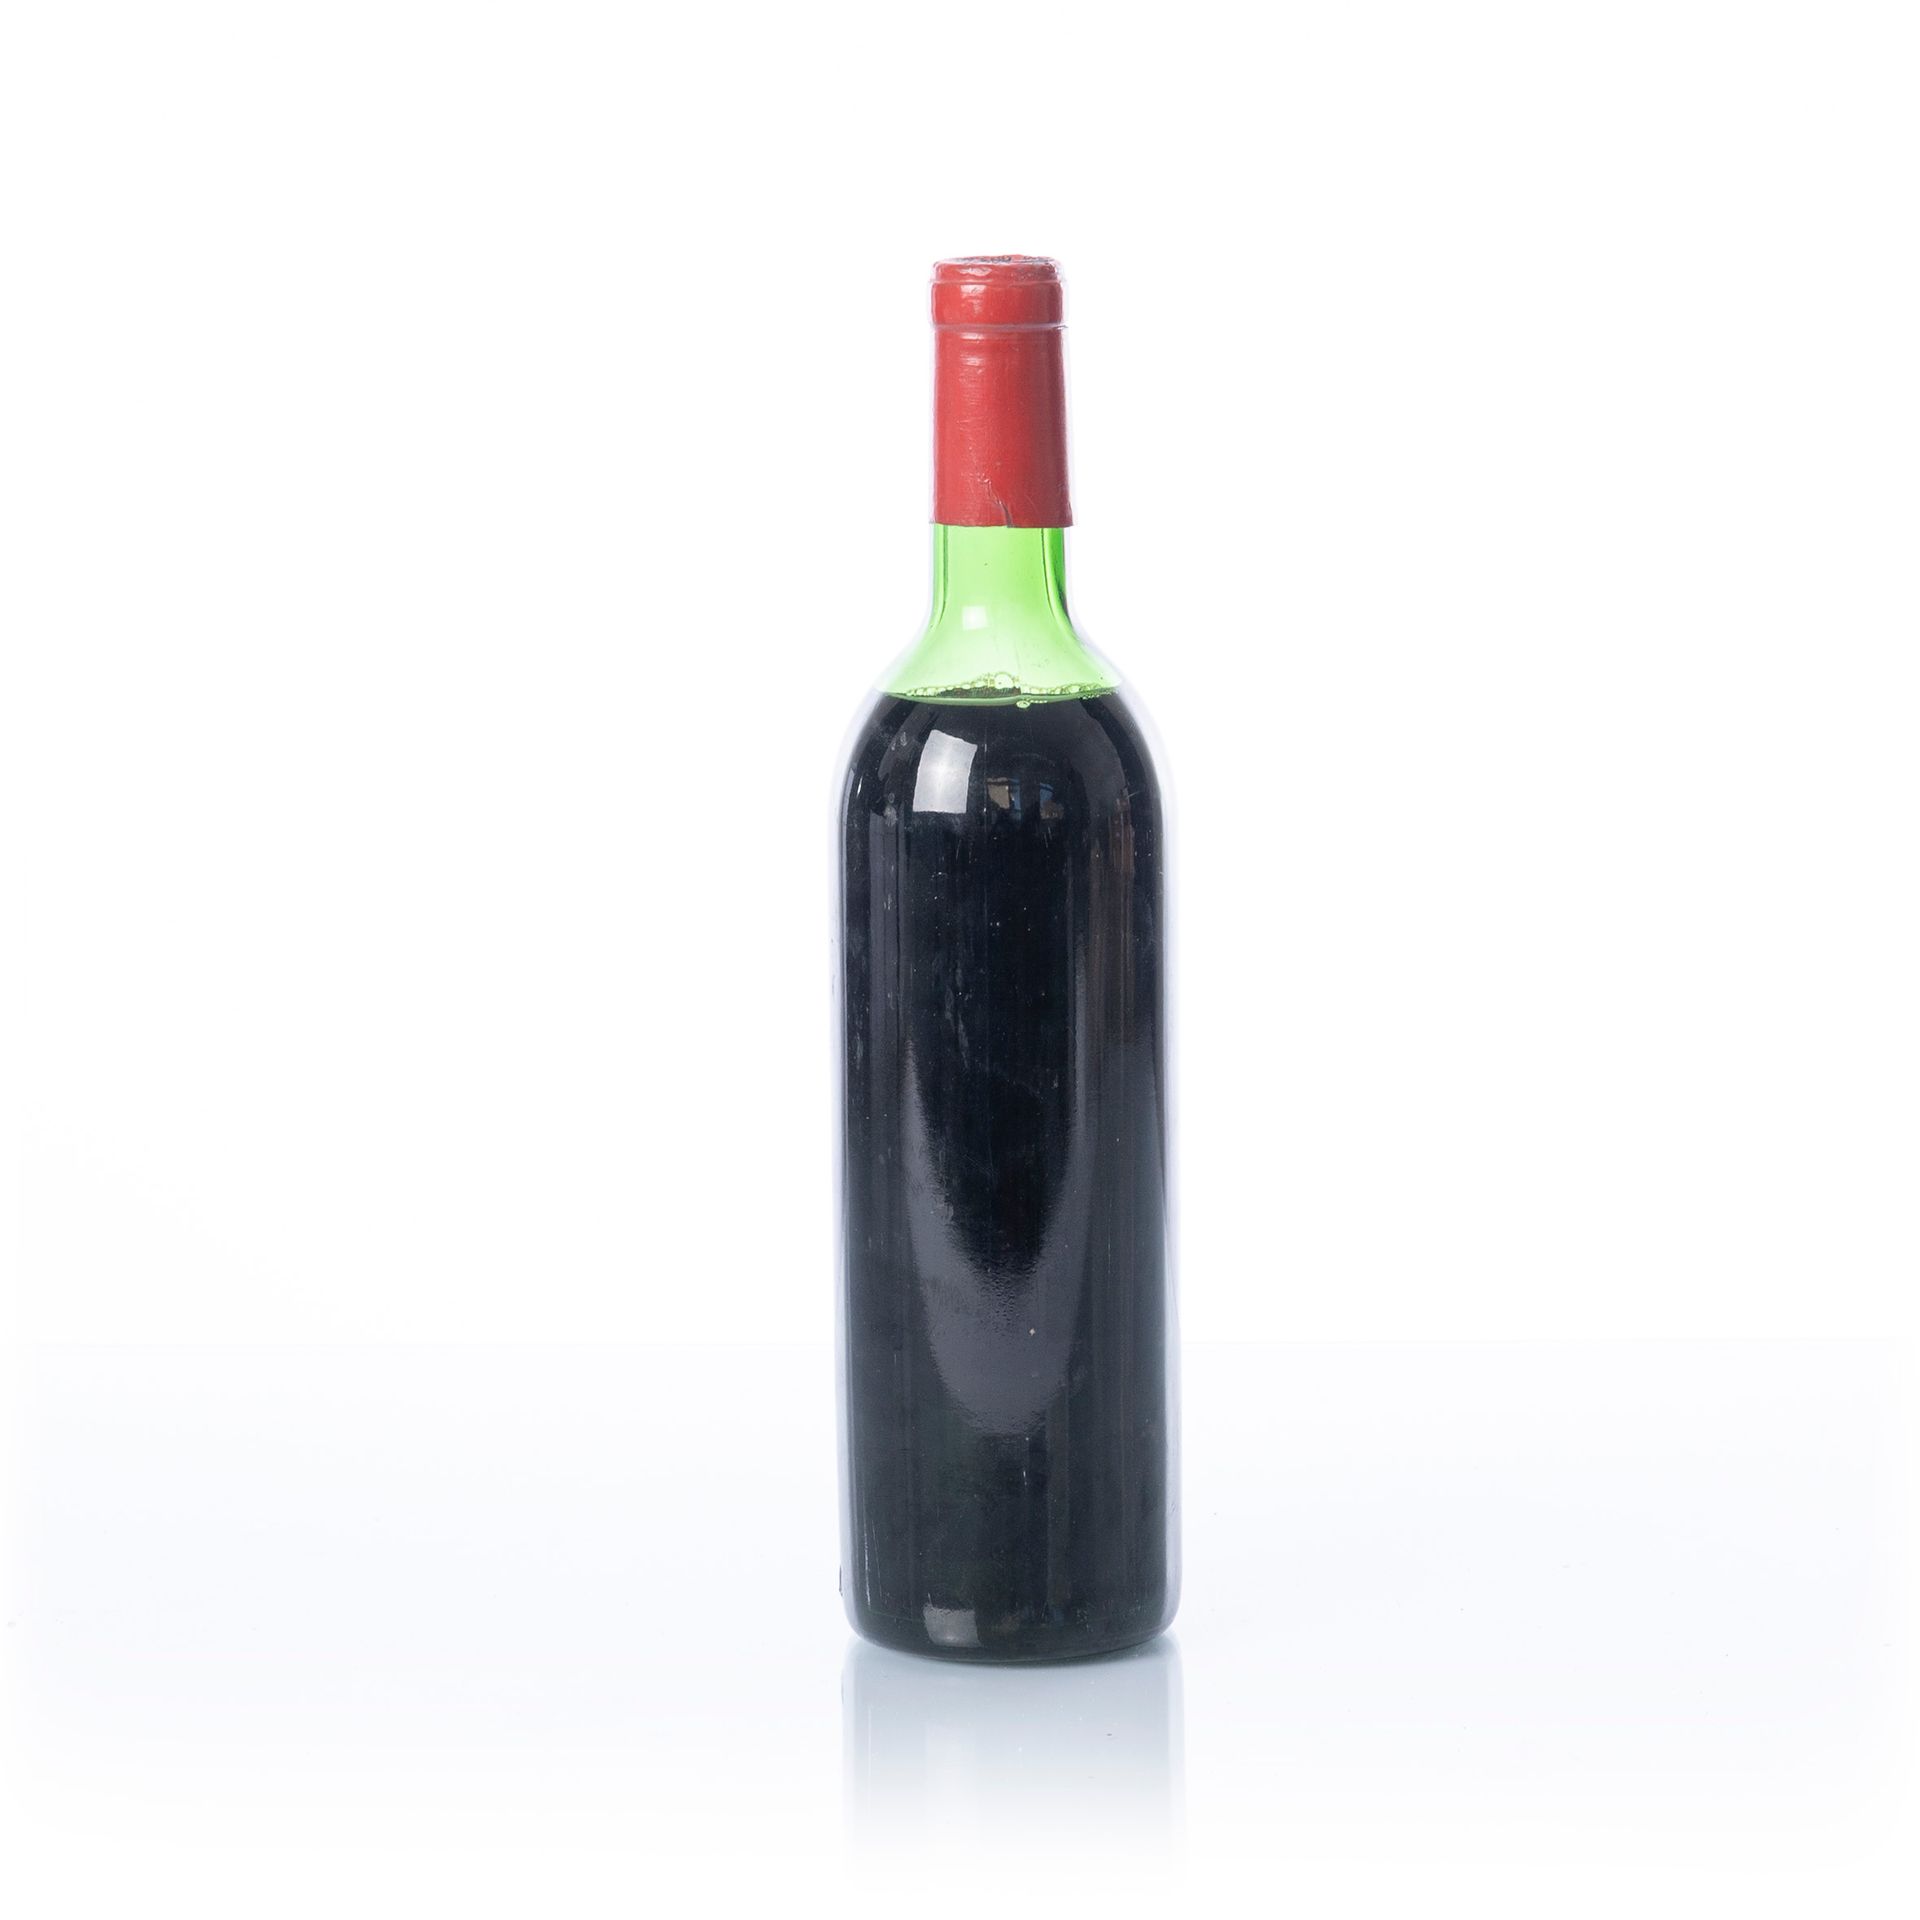 Null 1 botella de CHÂTEAU LATOUR

Año : Cosecha desconocida, etiqueta manuscrita&hellip;